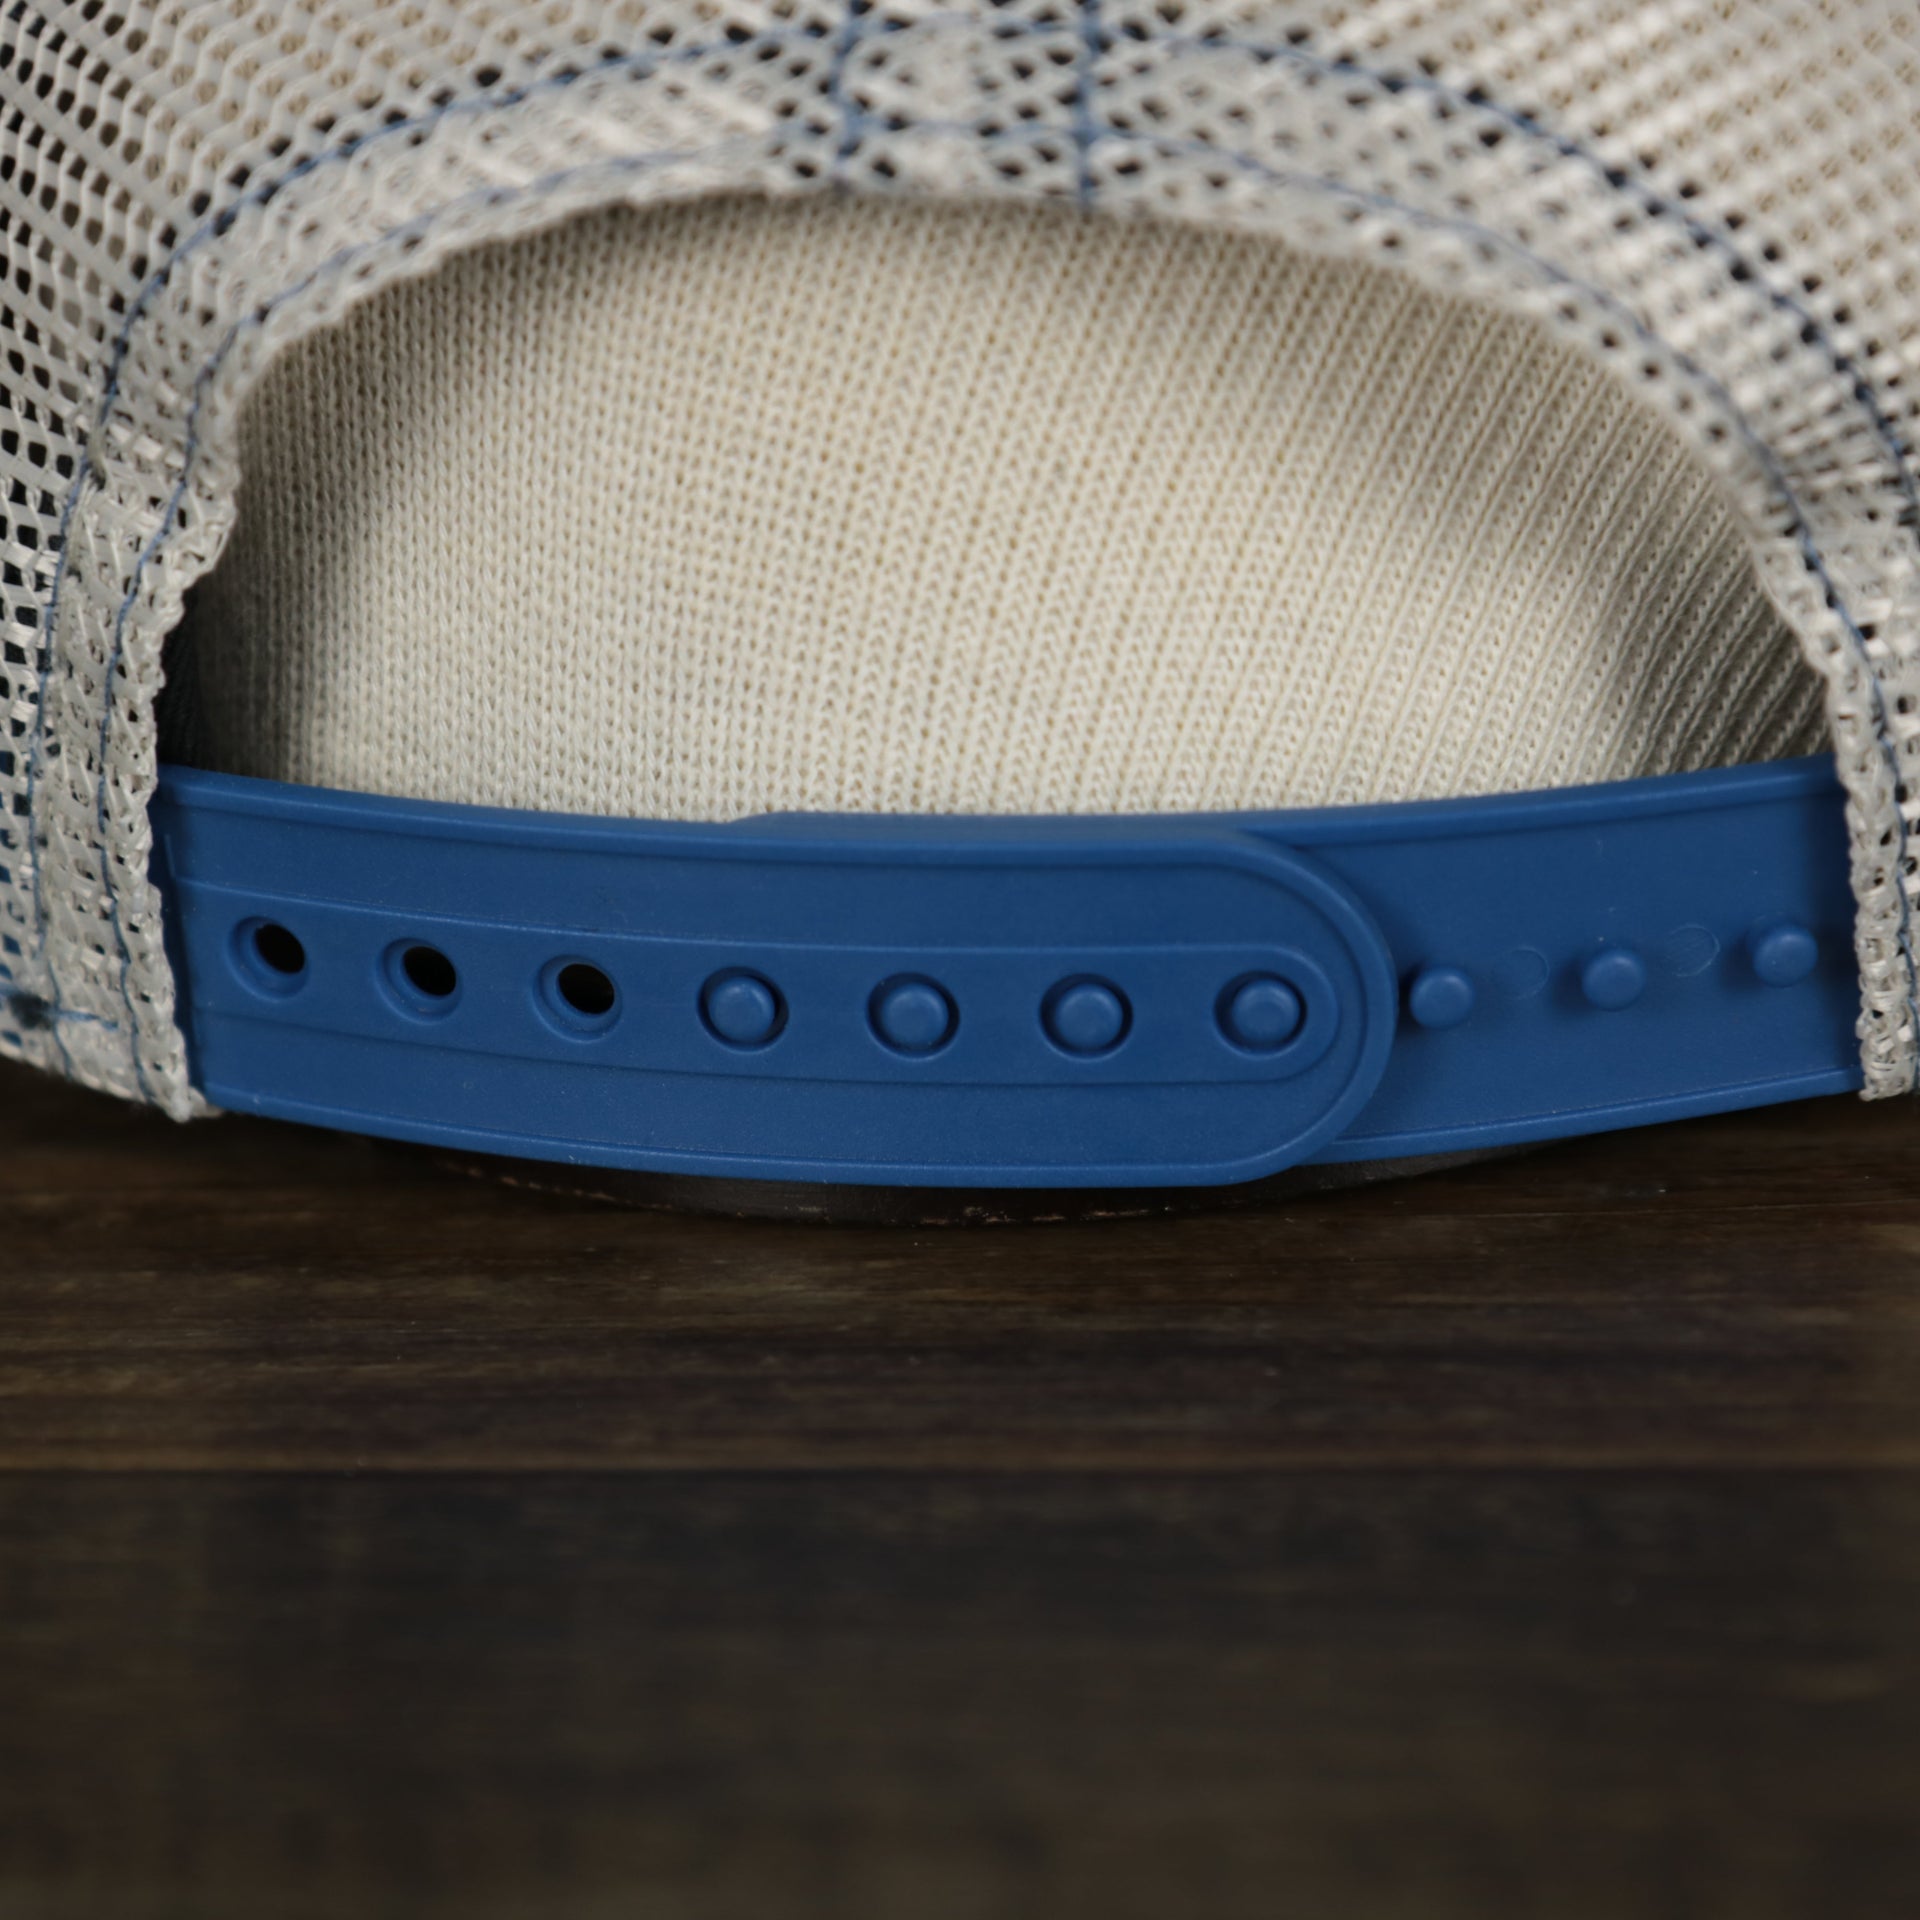 A close up of the adjustable strap on the Philadelphia 76ers New Era 9Twenty Washed Trucker hat